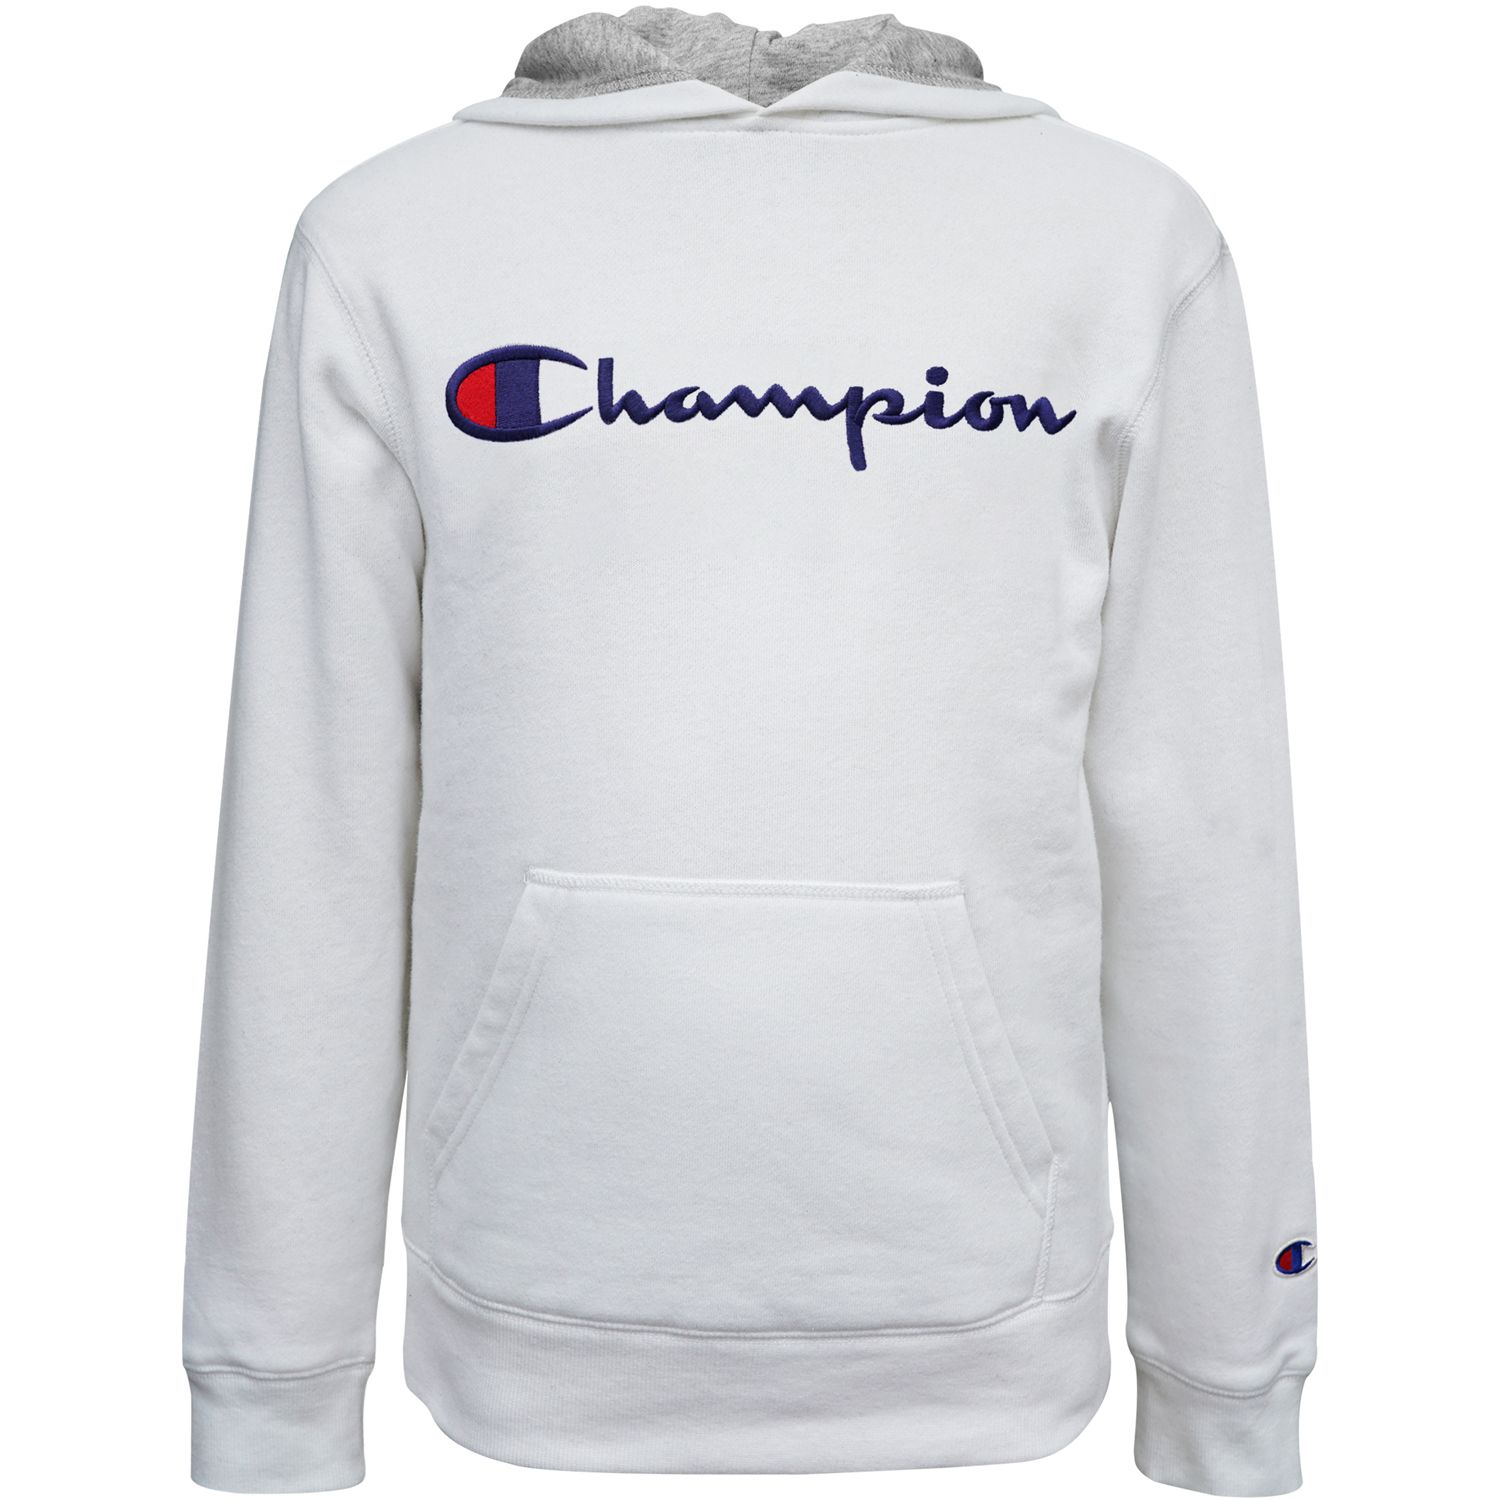 kohl's champion hoodie